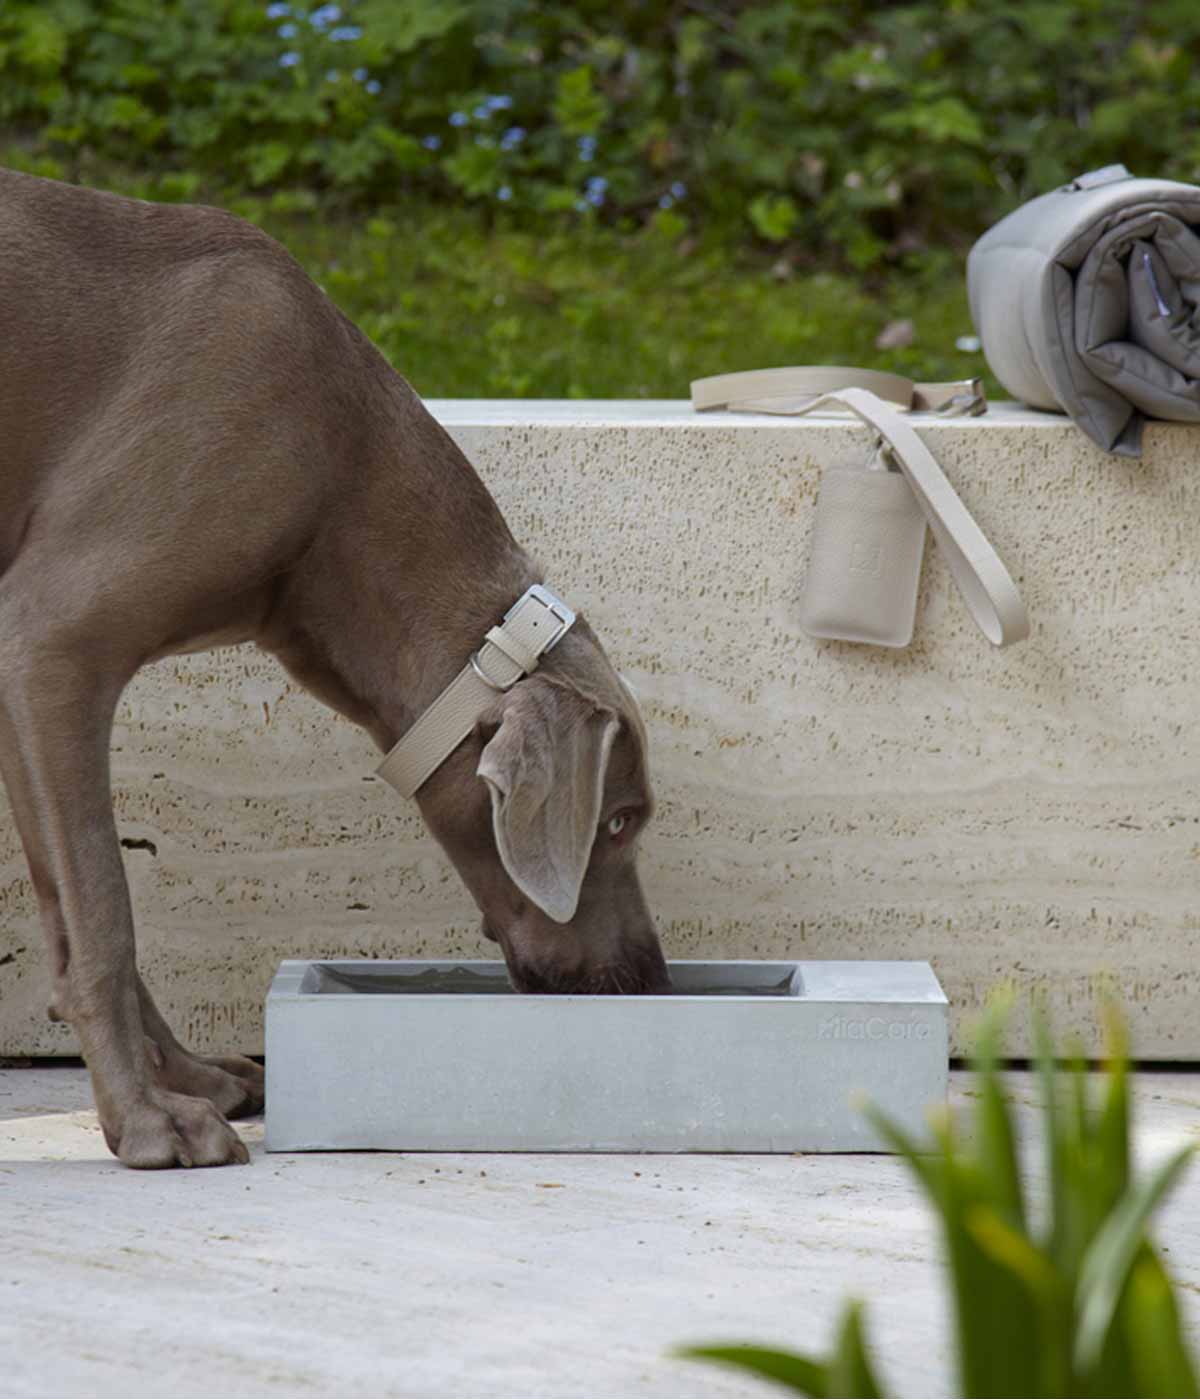 MiaCara Trogolo Outdoor Dog Bowl